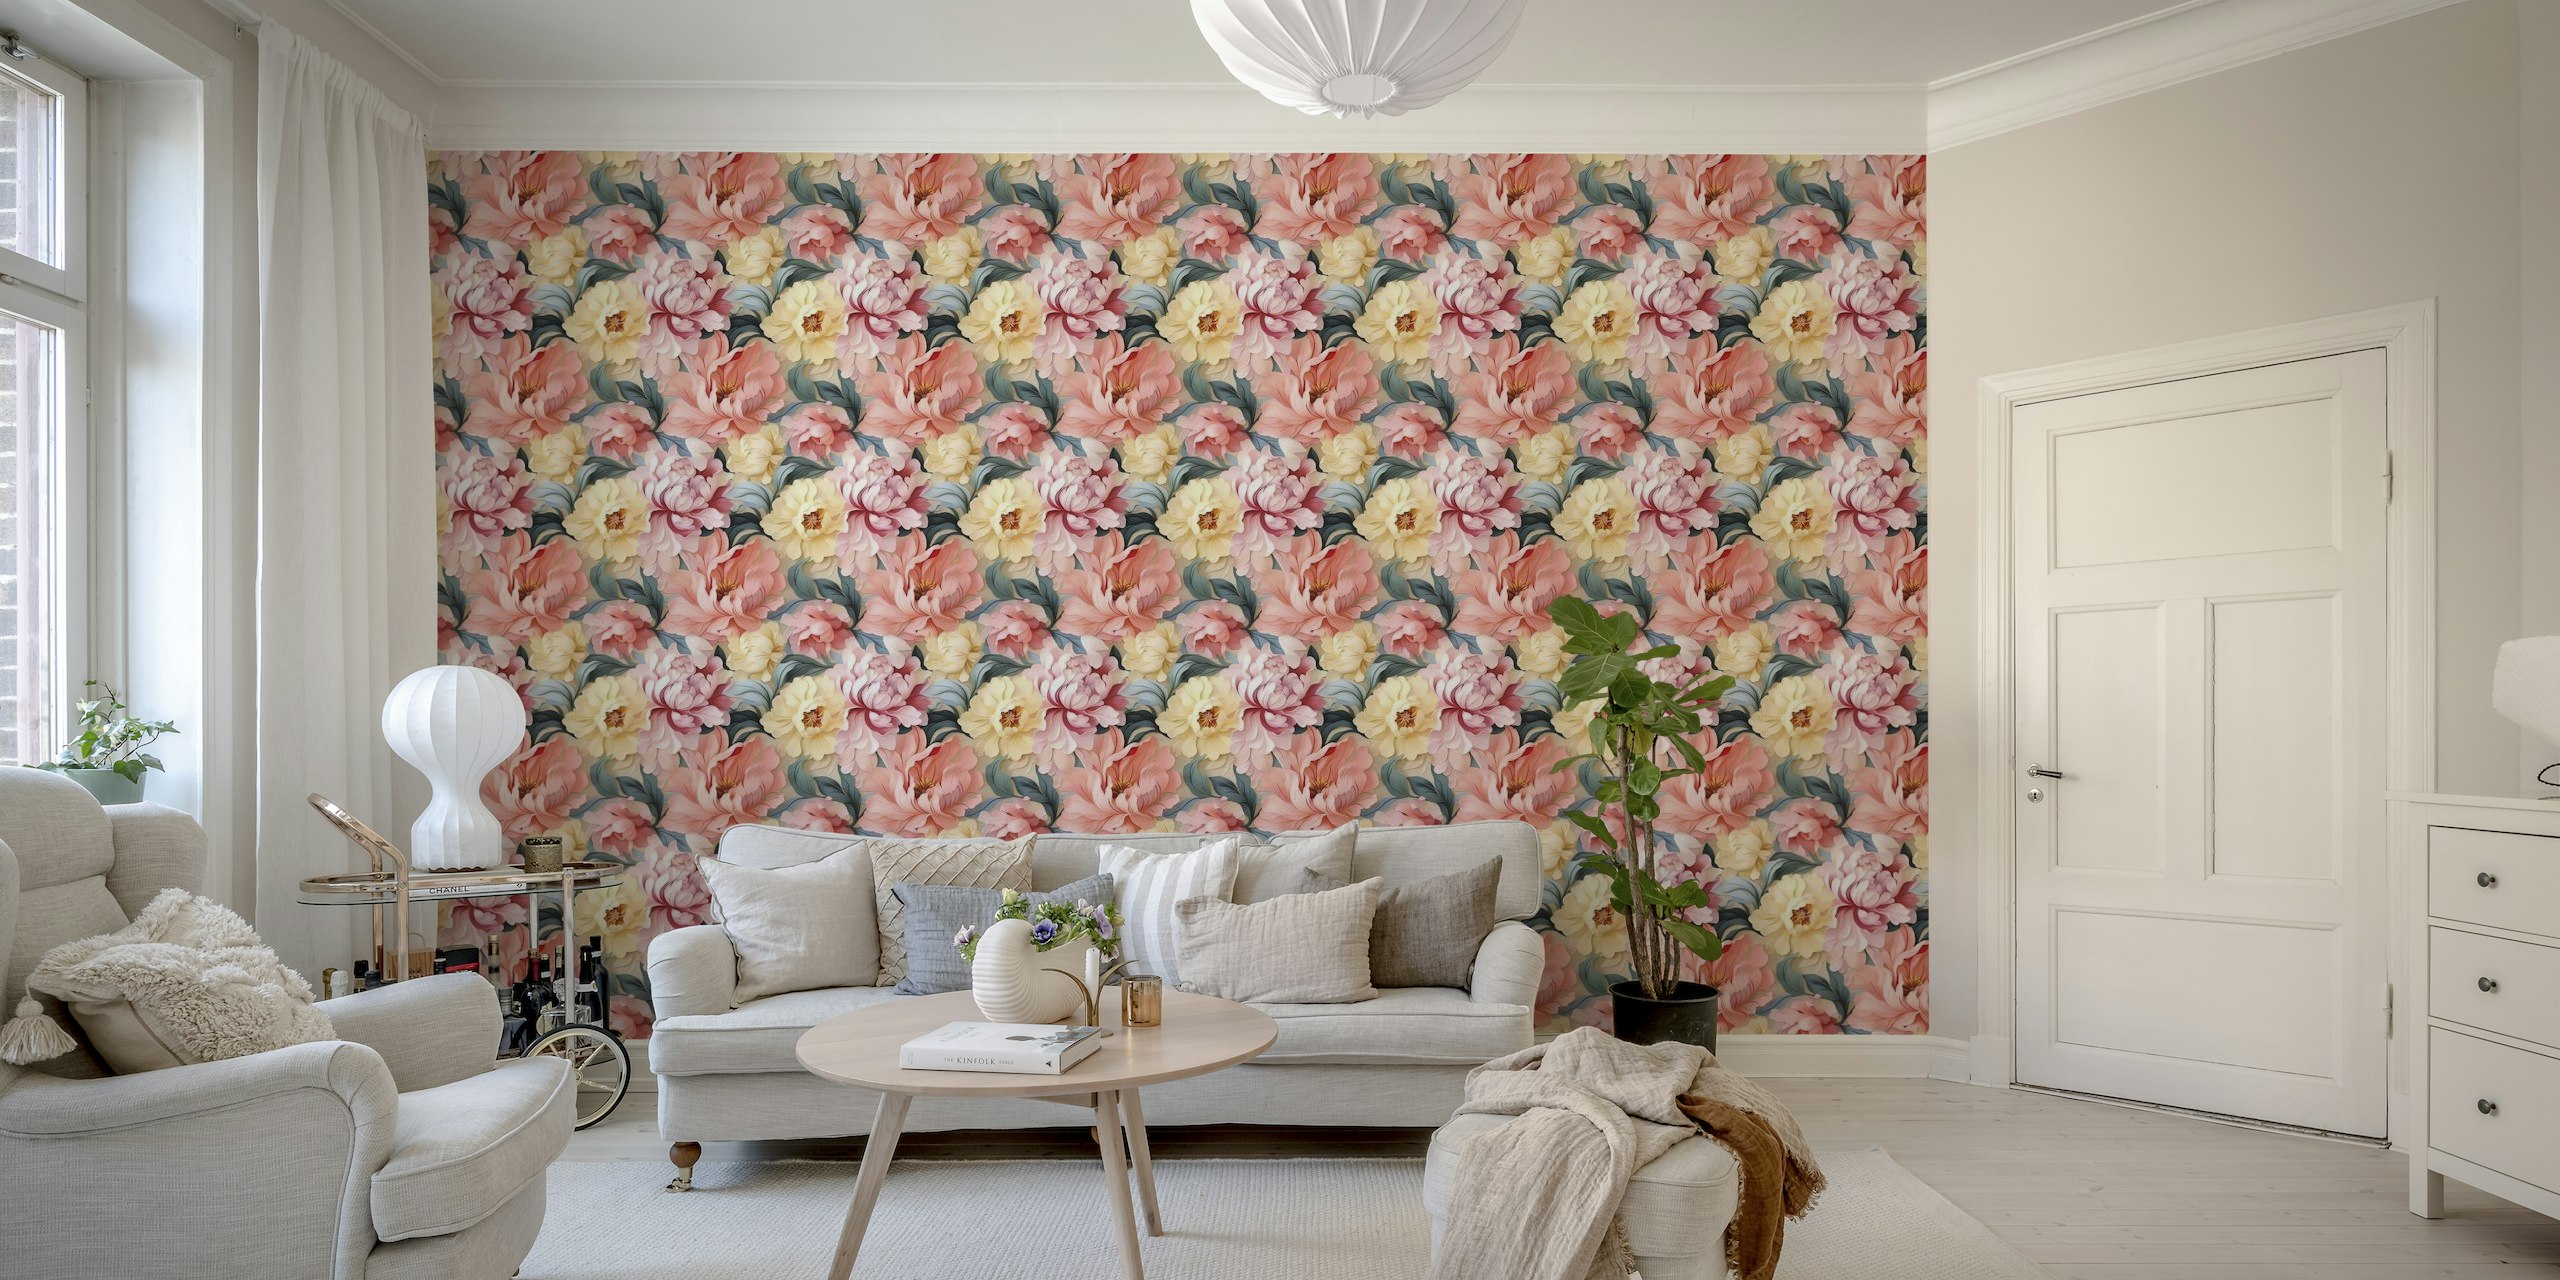 Tranquil Rose Radiance Wallpaper behang